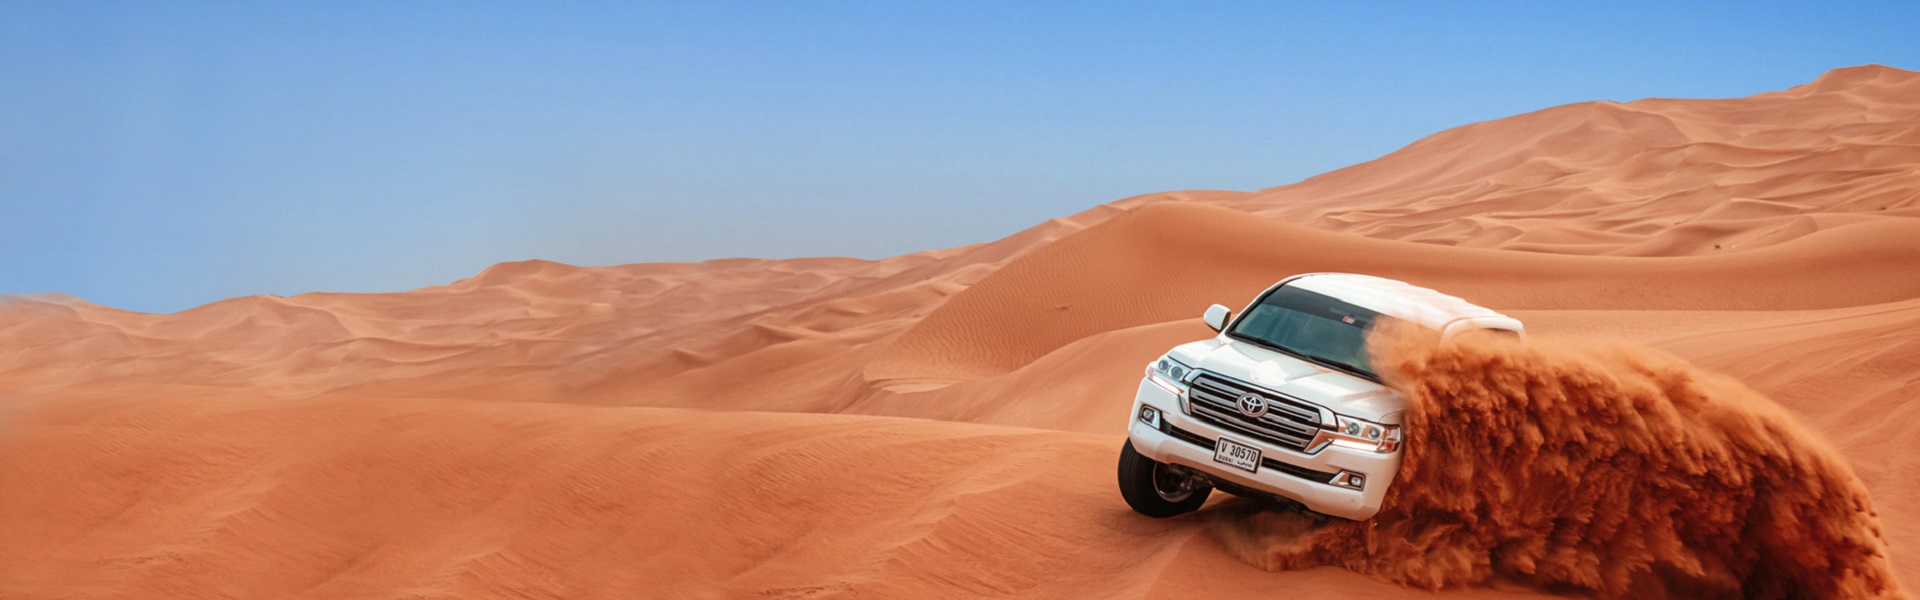 Cheap car rental Dubai | Desert safari in Dubai